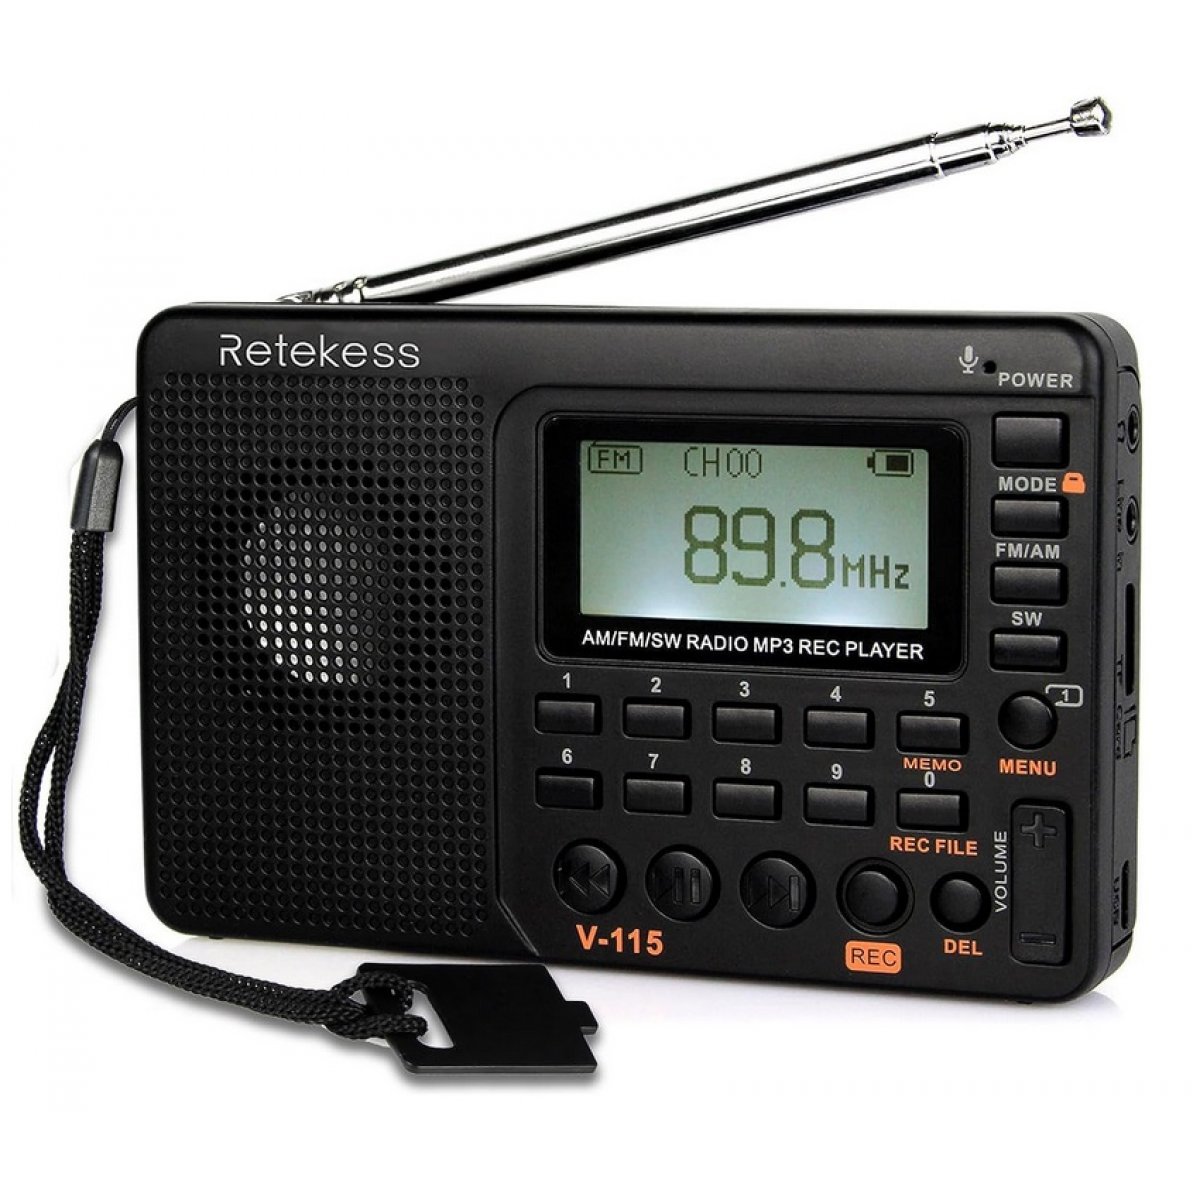 RADIO DIGITAL AM/FM/SW CON GRABACION V115 REKETESS